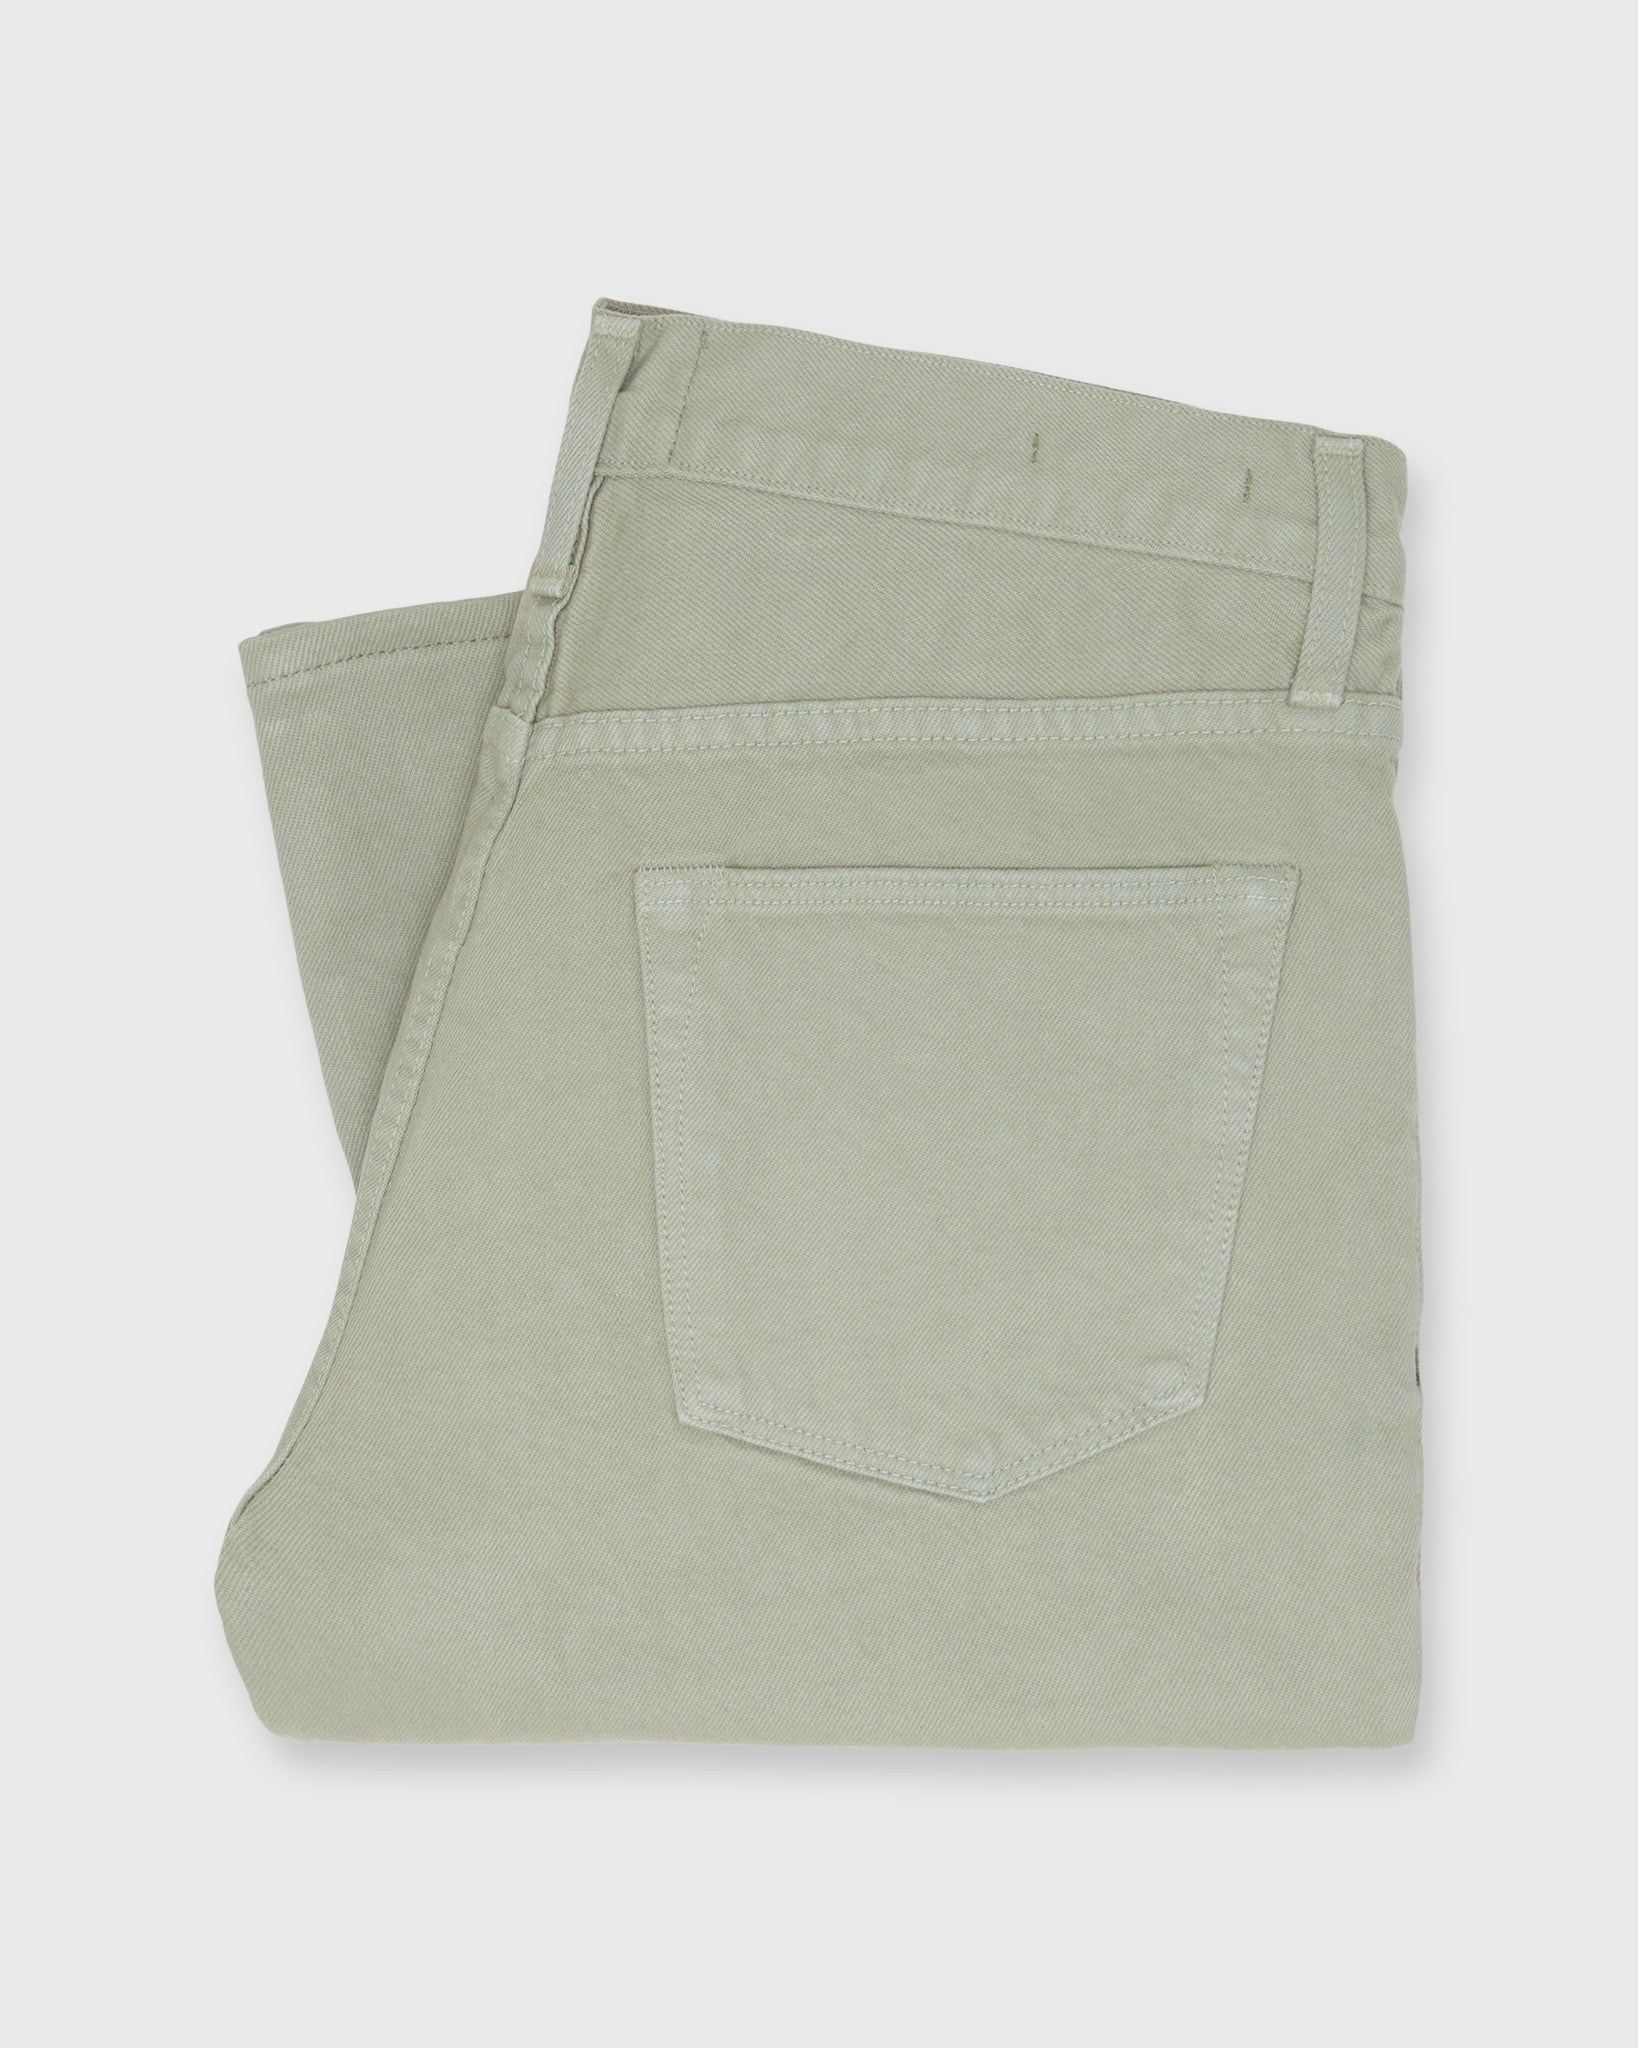 Slim Straight Jean in Spring Olive Garment-Dyed Denim